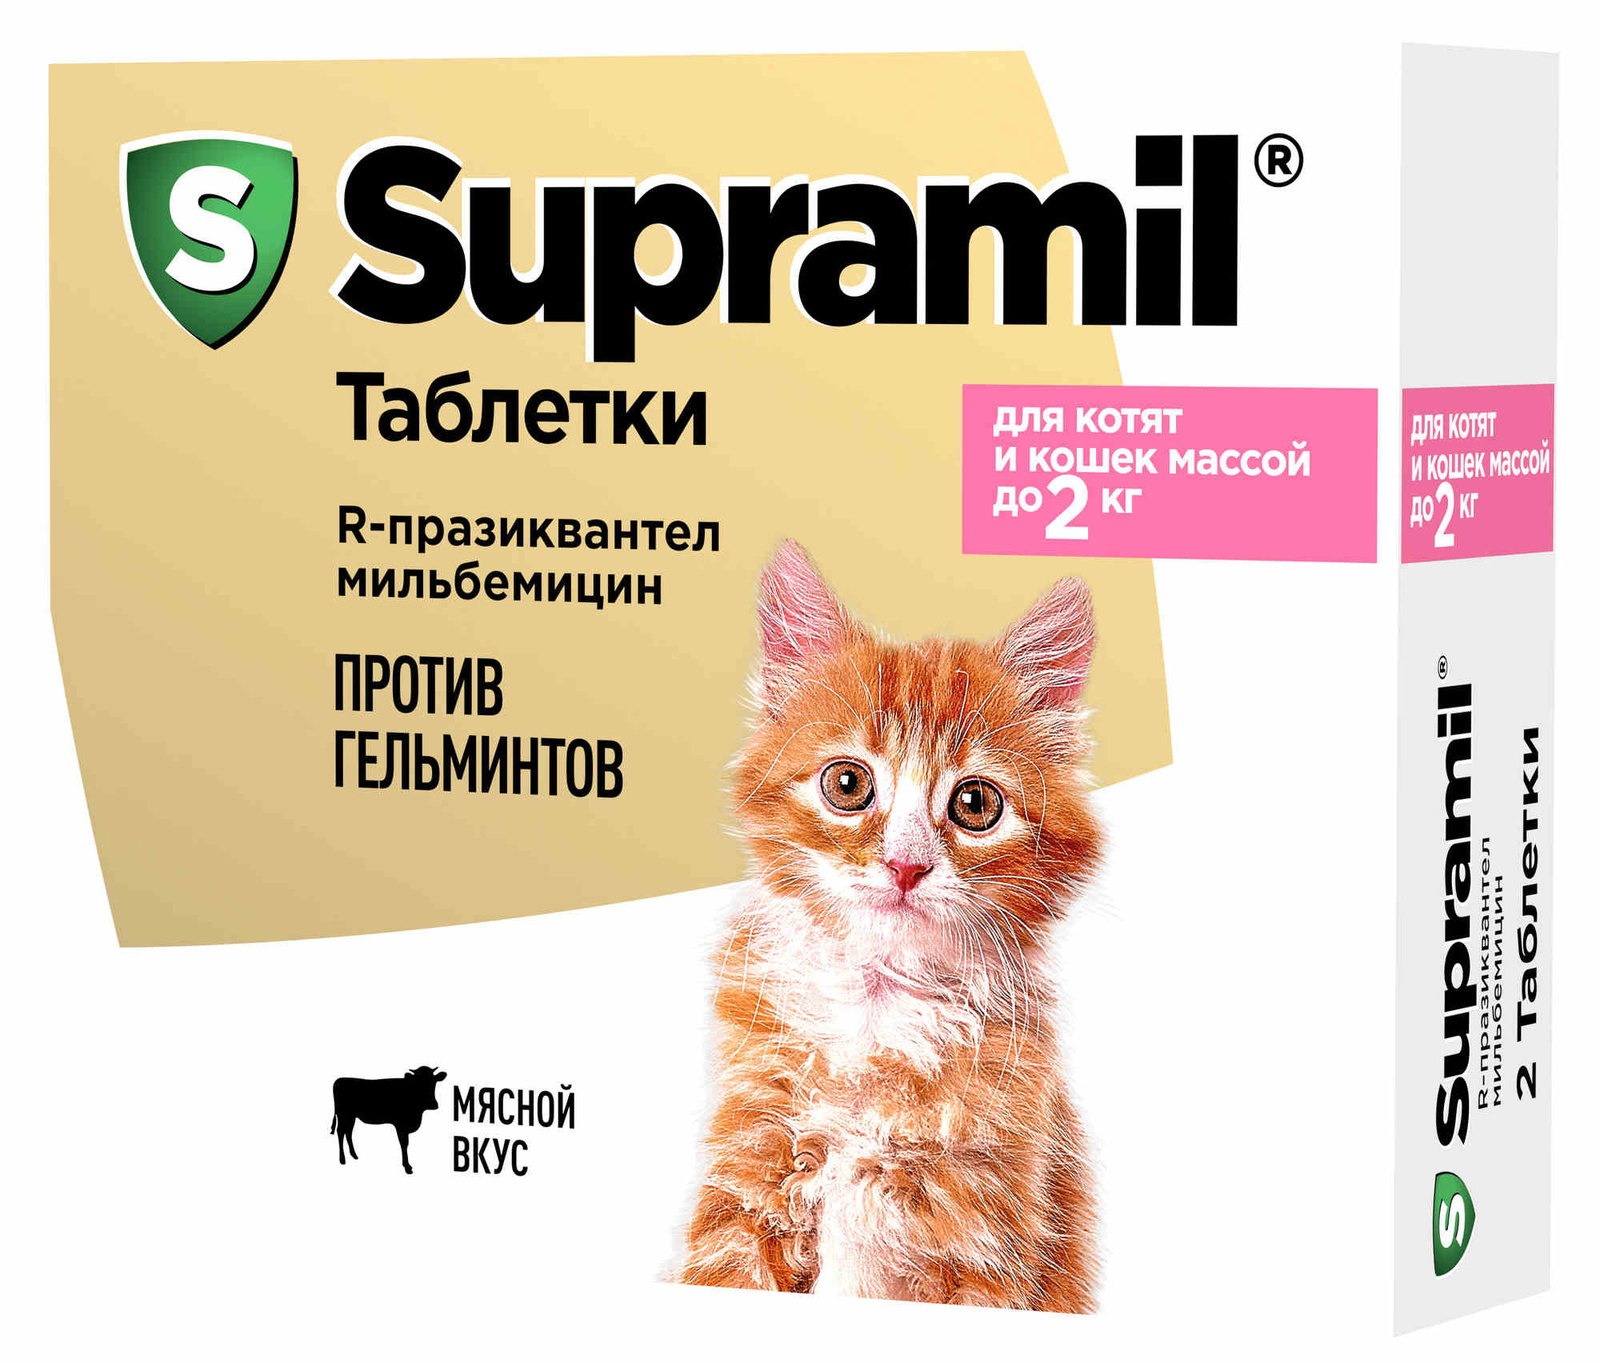 Астрафарм Астрафарм антигельминтный препарат Supramil для котят и кошек массой до 2 кг (таблетки) (20 г) крка жевательные таблетки кладакса антибактериальный препарат широкого спектра 250 мг мг 0 03 кг 3 штуки